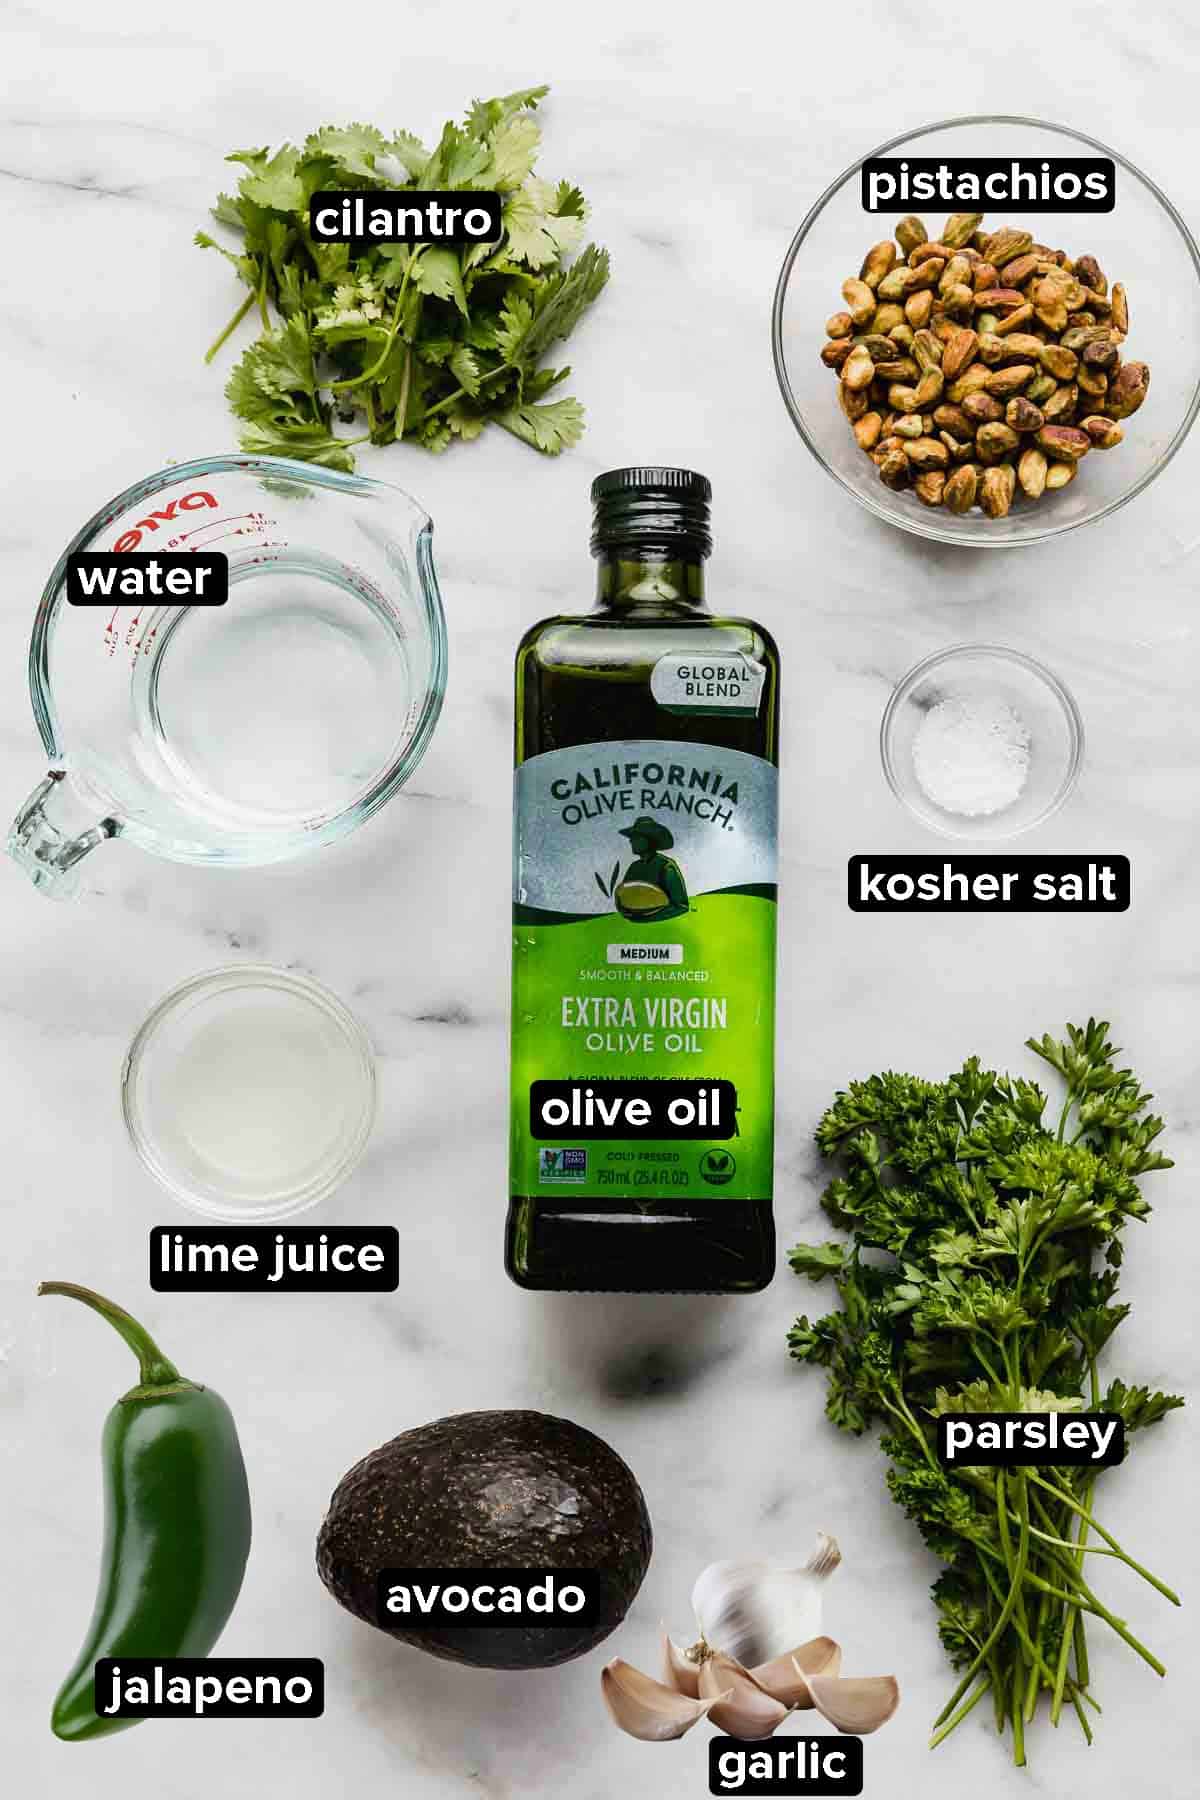 Green Sauce Recipe ingredients on a white background: parsley, cilantro, avocado, jalapeño, garlic, pistachios, and olive oil.